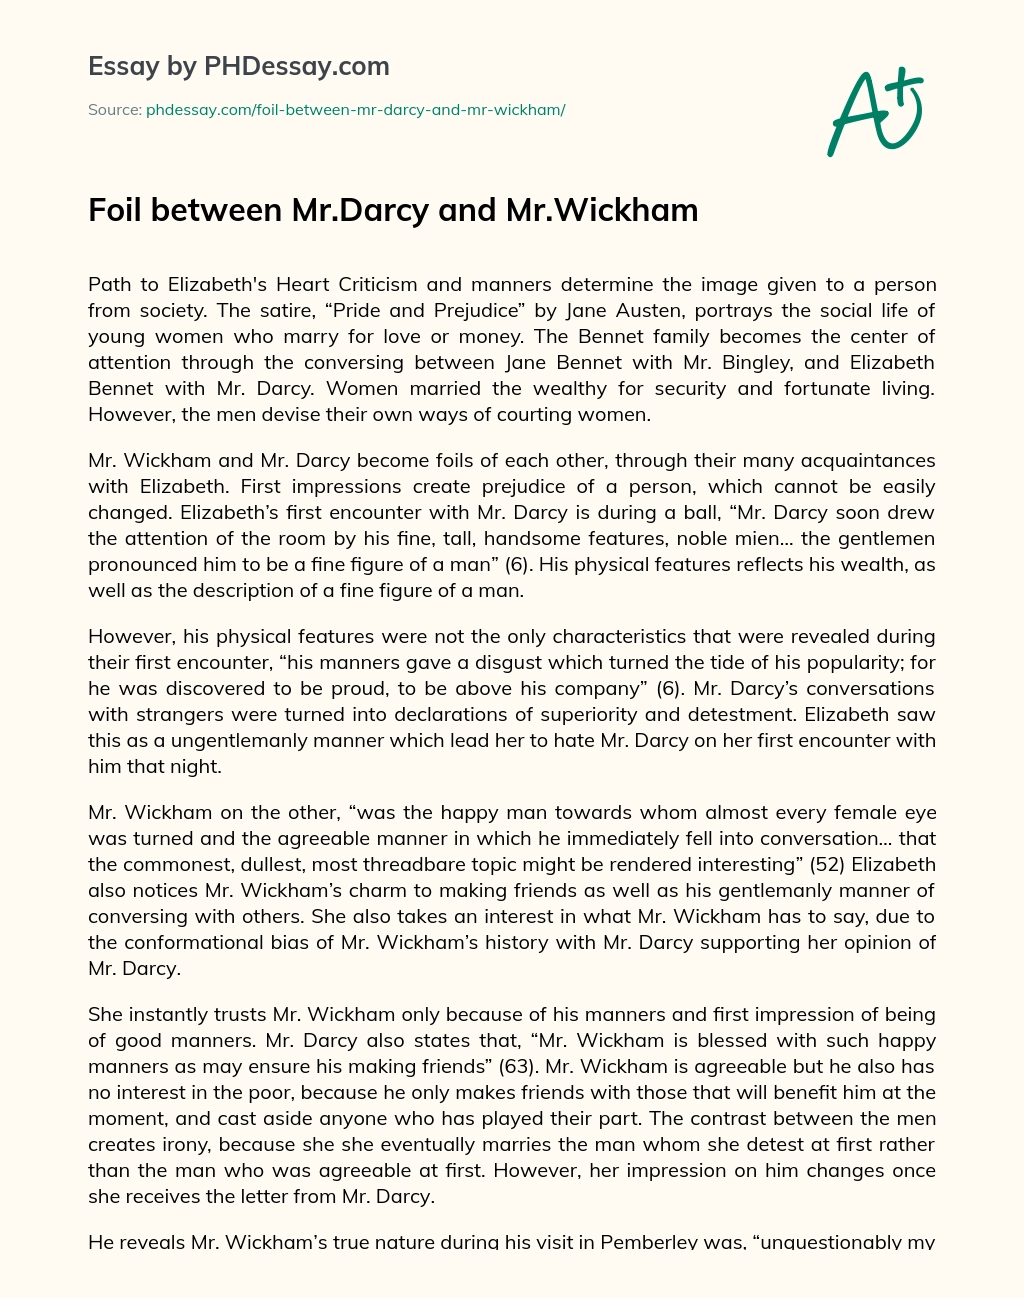 Foil between Mr.Darcy and Mr.Wickham essay